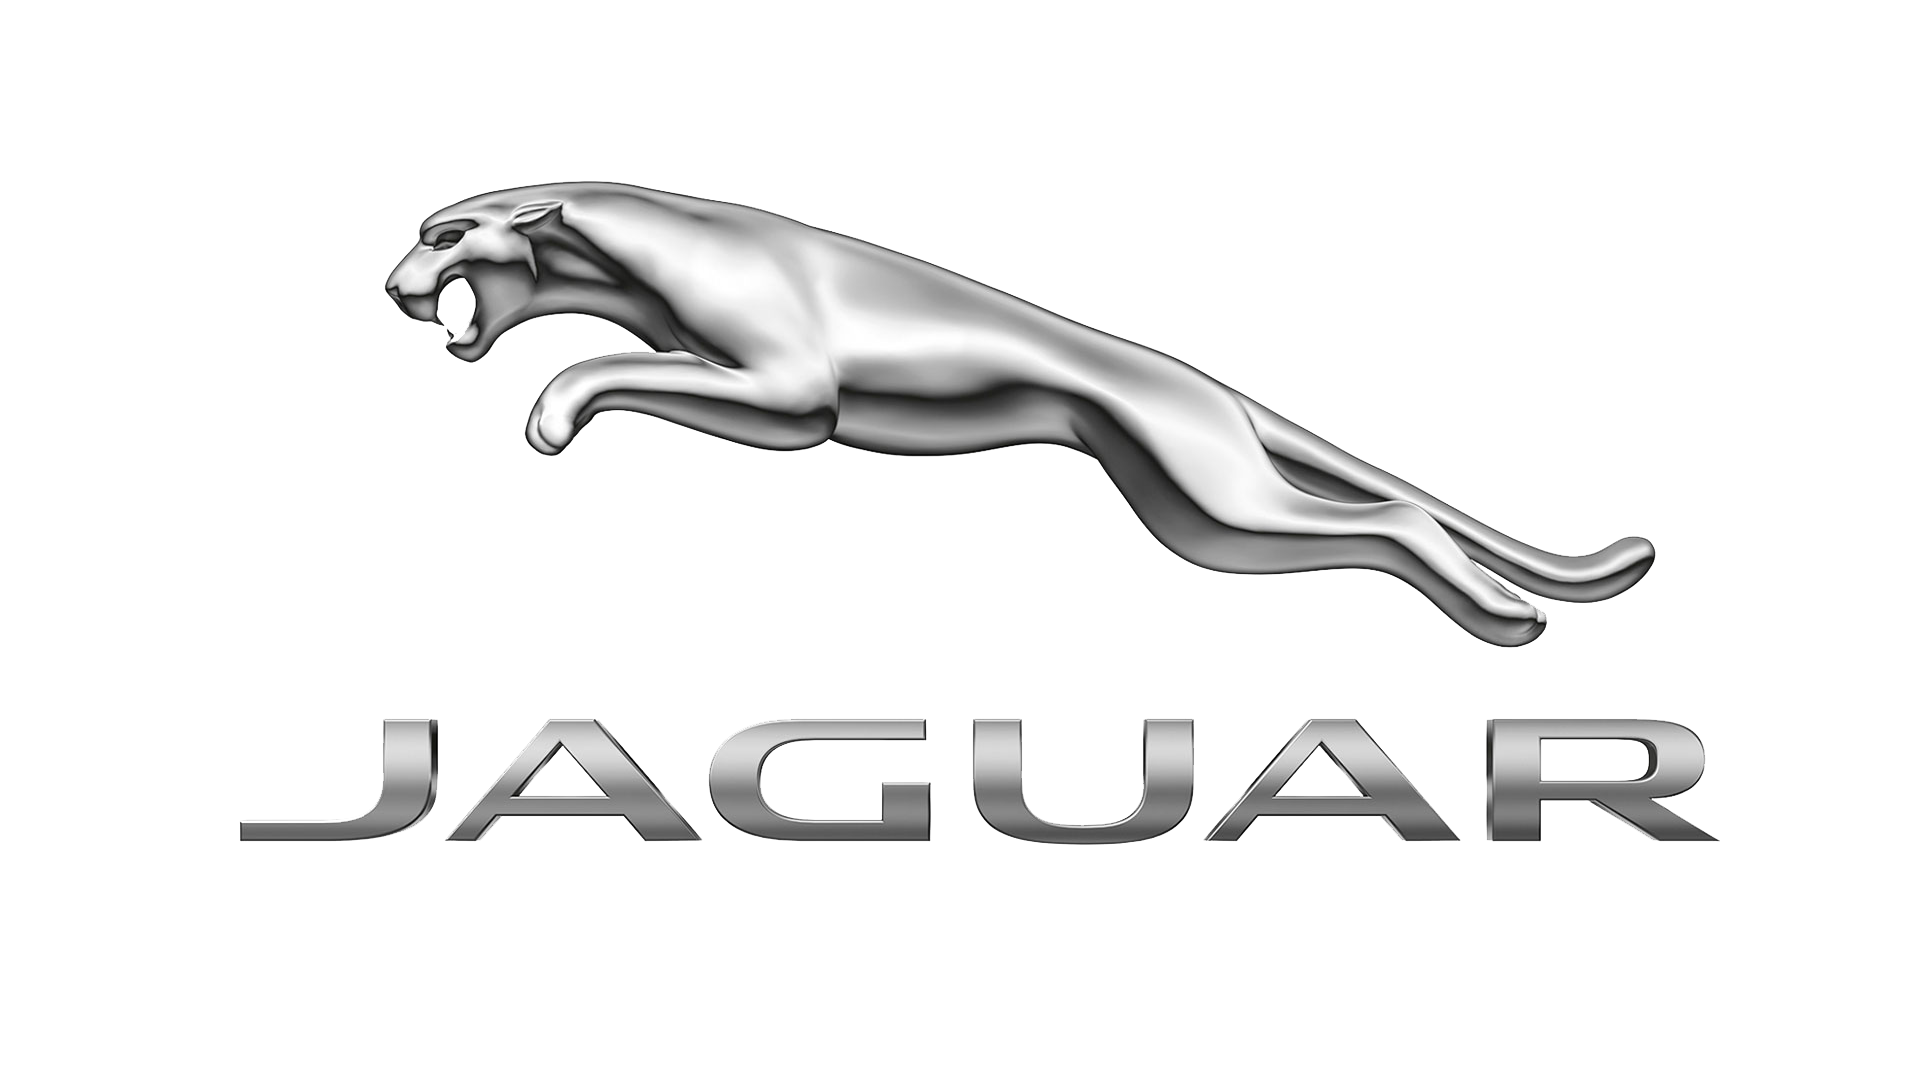 Jaguar clipart tumundografico